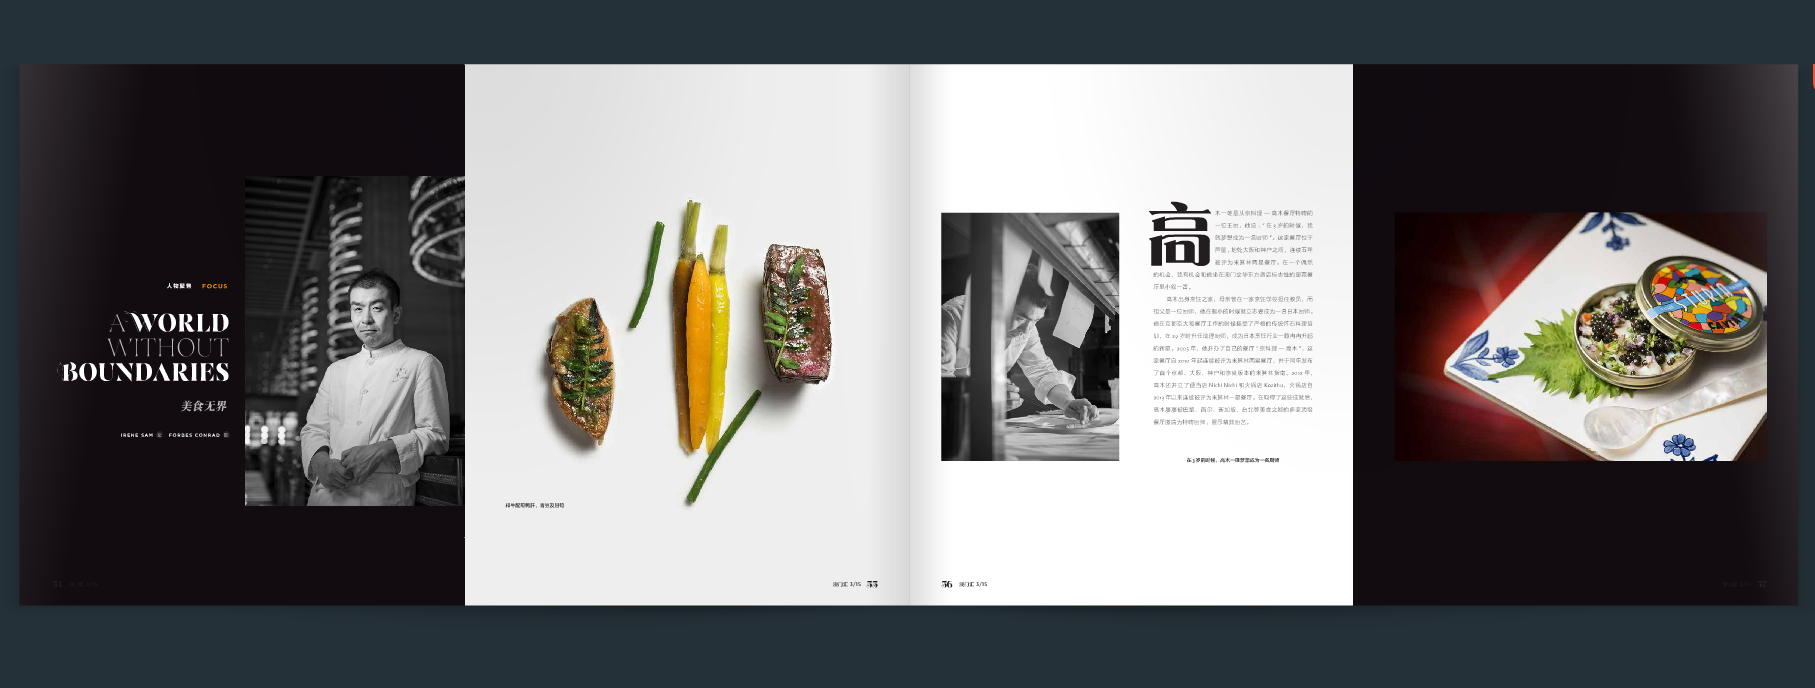 Takagi Kazuo Mandarin Oriental food feature article in Macau Inc magazine